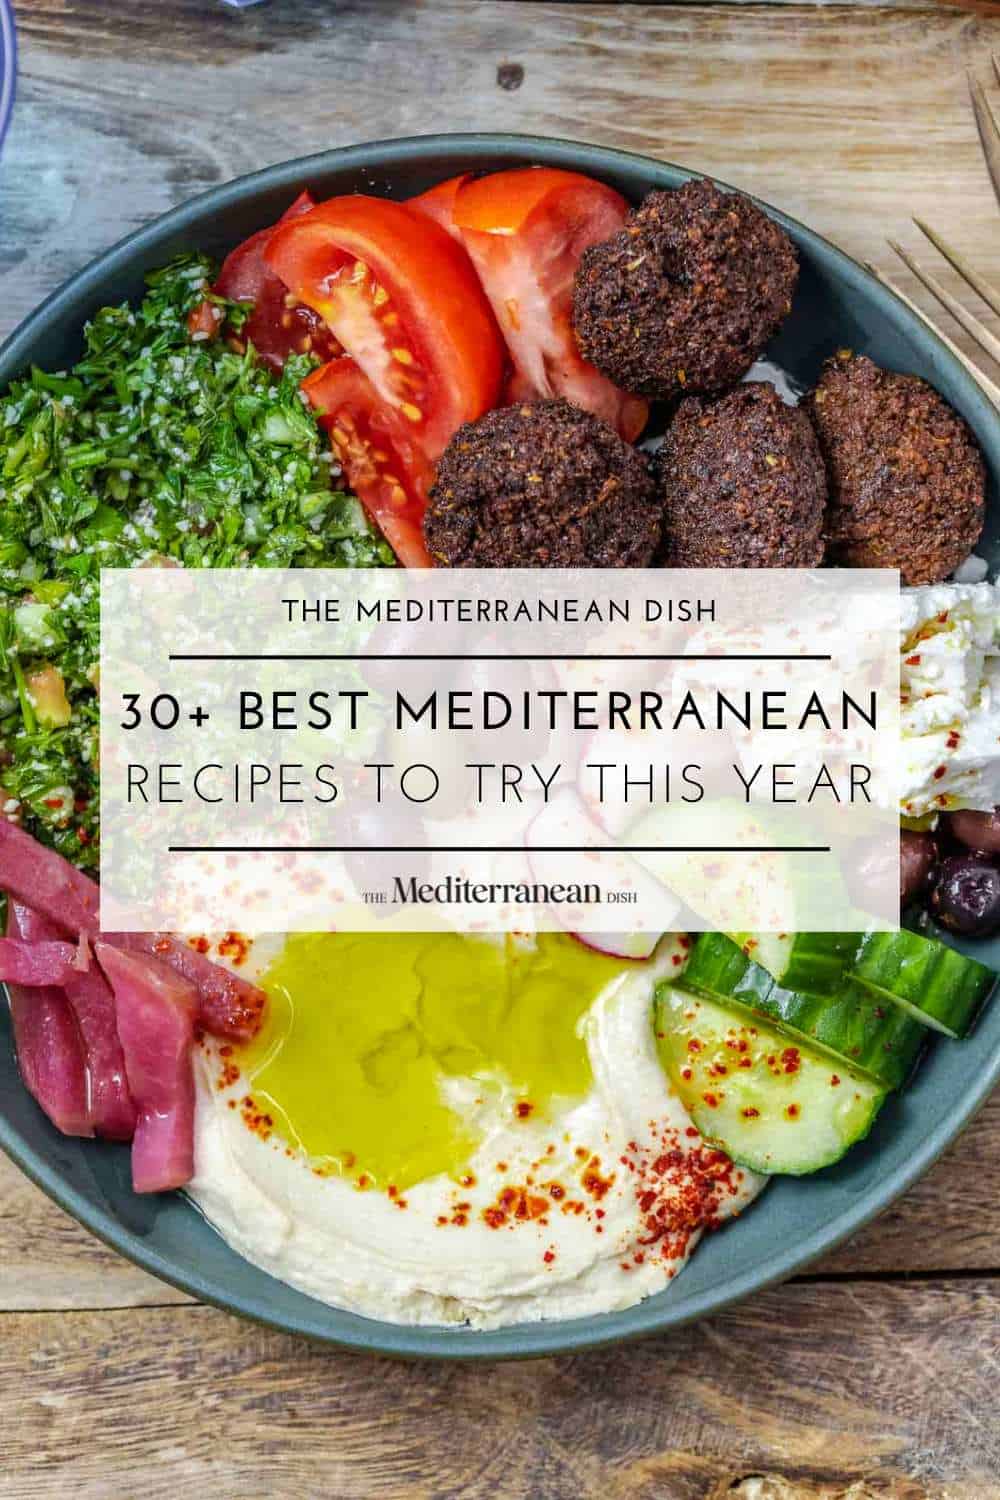 The Mediterranean Diet and Cancer Prevention